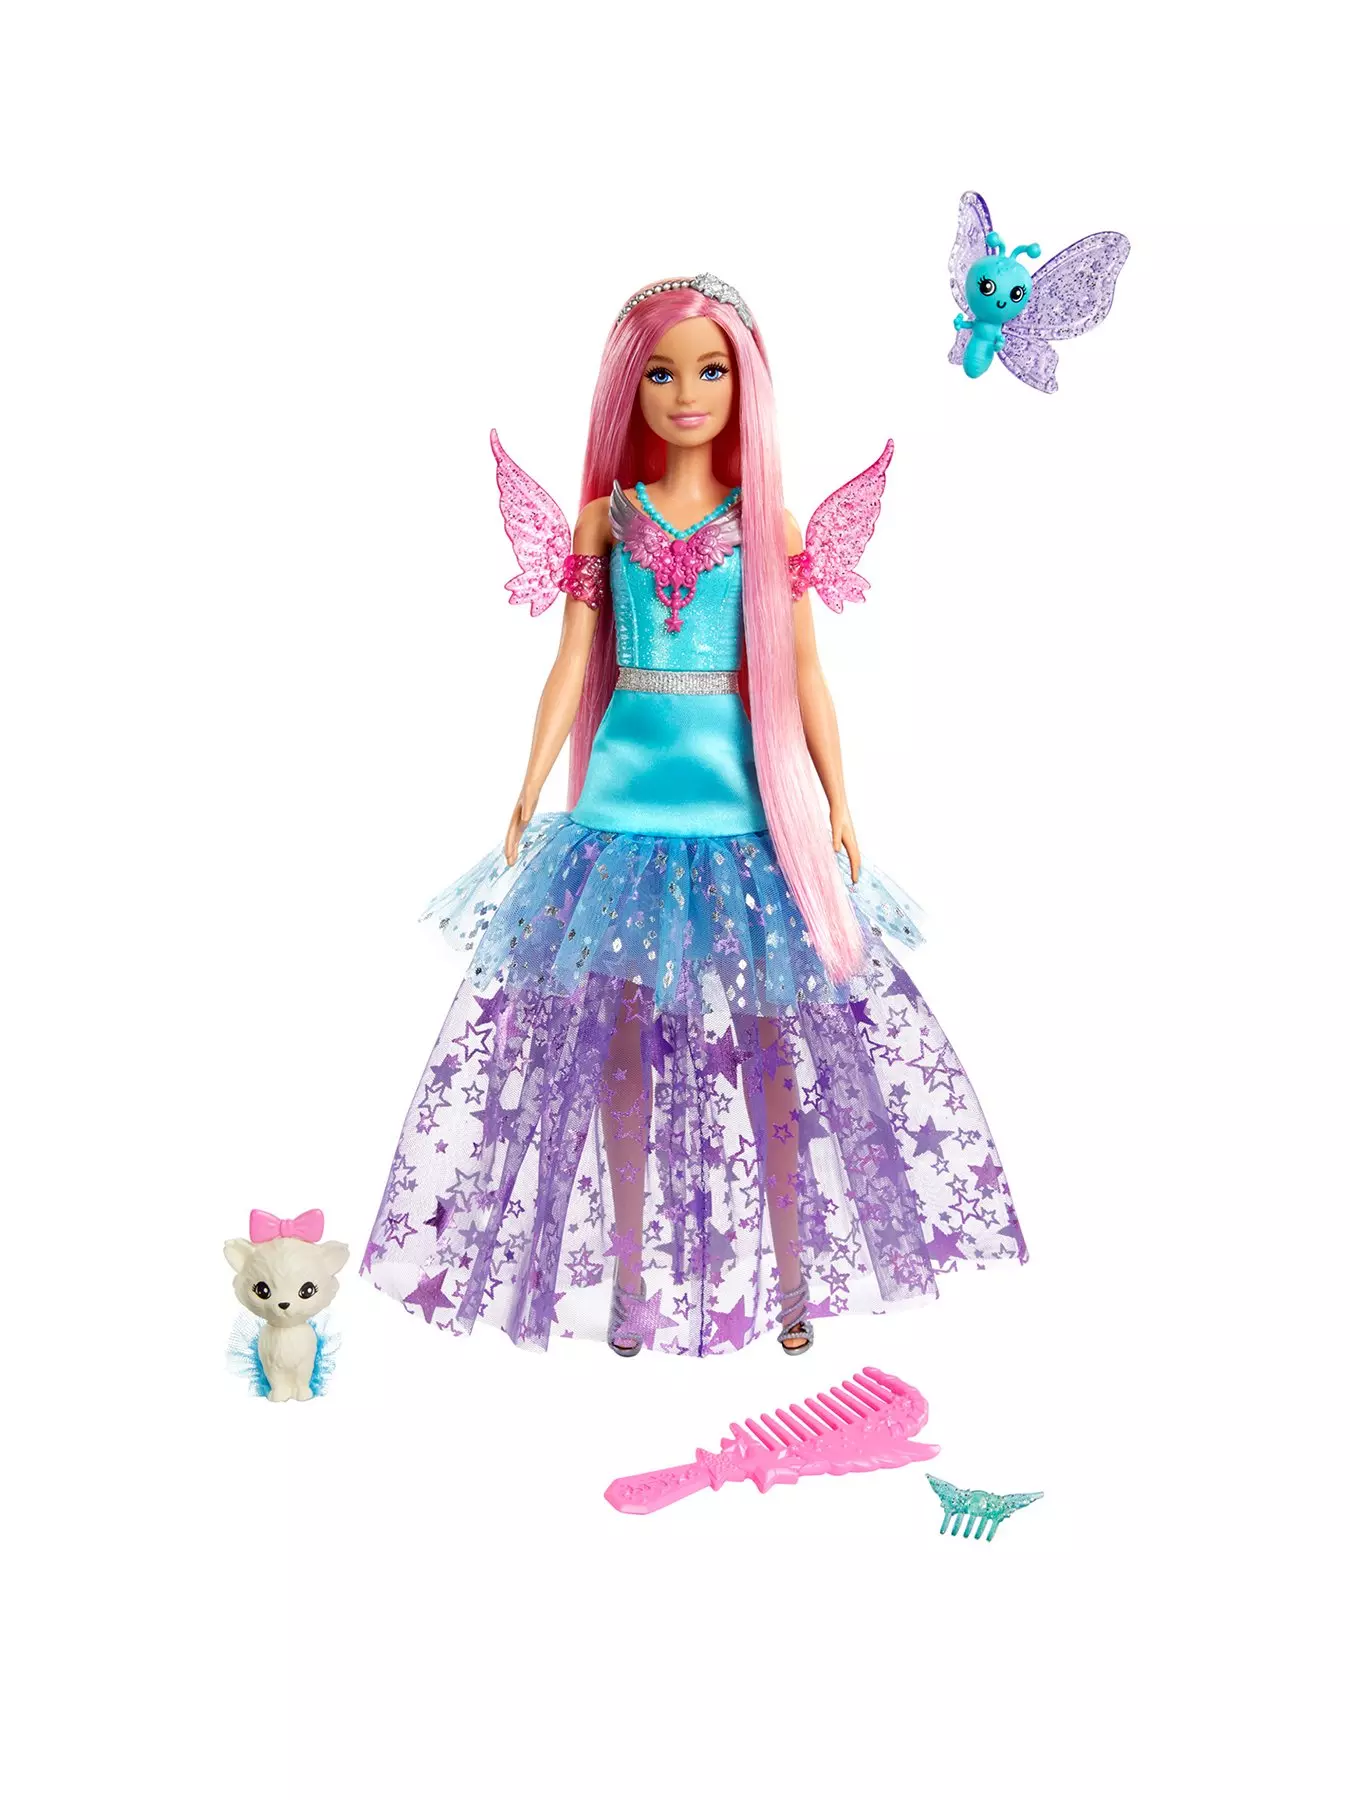  Barbie Cutie Reveal Doll & Accessories, Lion Plush Costume & 10  Surprises Including Color Change, “Hope” Cozy Cute Tees : Everything Else